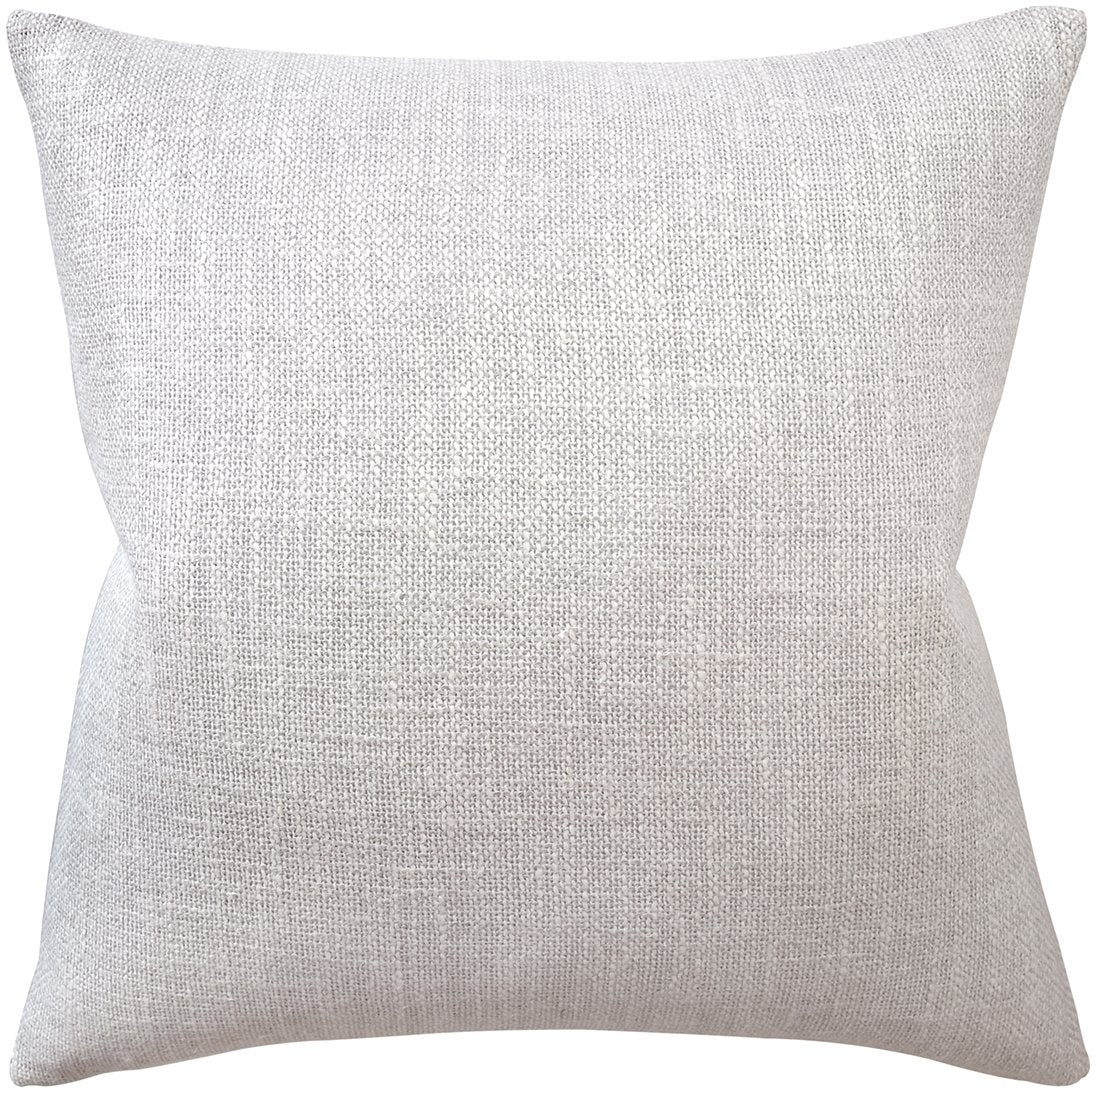 Amagansett Grey Pillow - Ryan Studio at Fig Linens